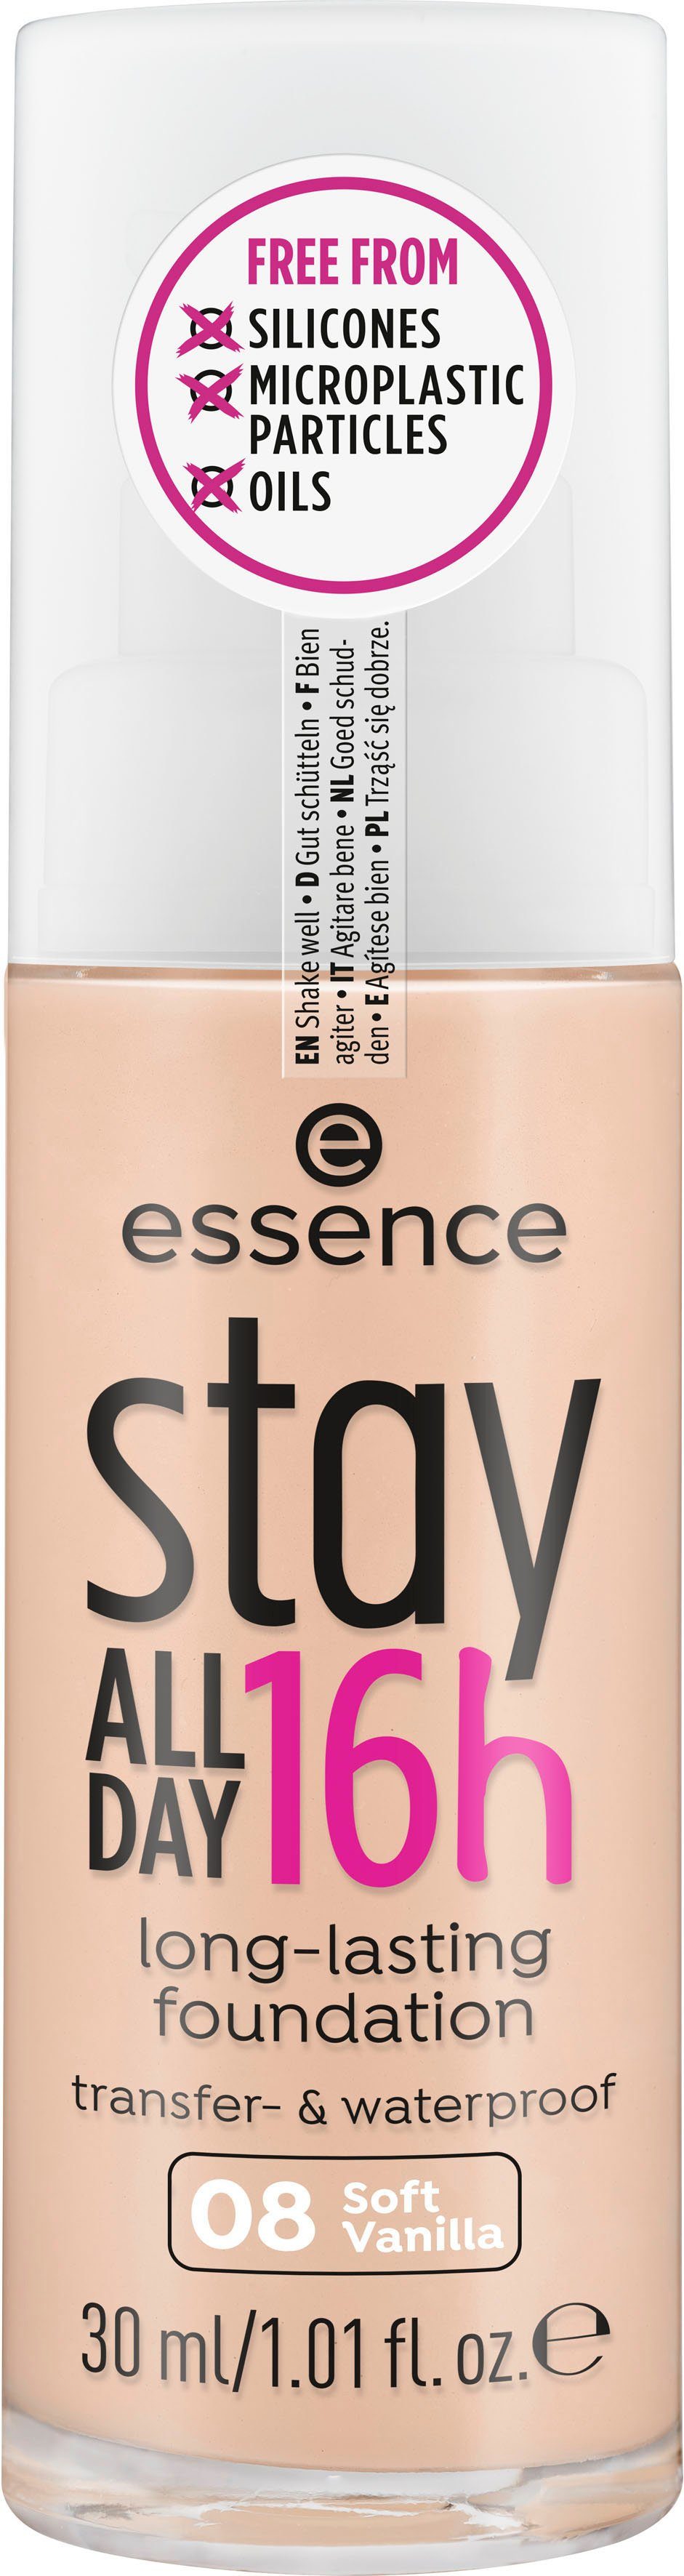 Essence Foundation stay ALL 16h DAY long-lasting, Soft 3-tlg. Vanilla